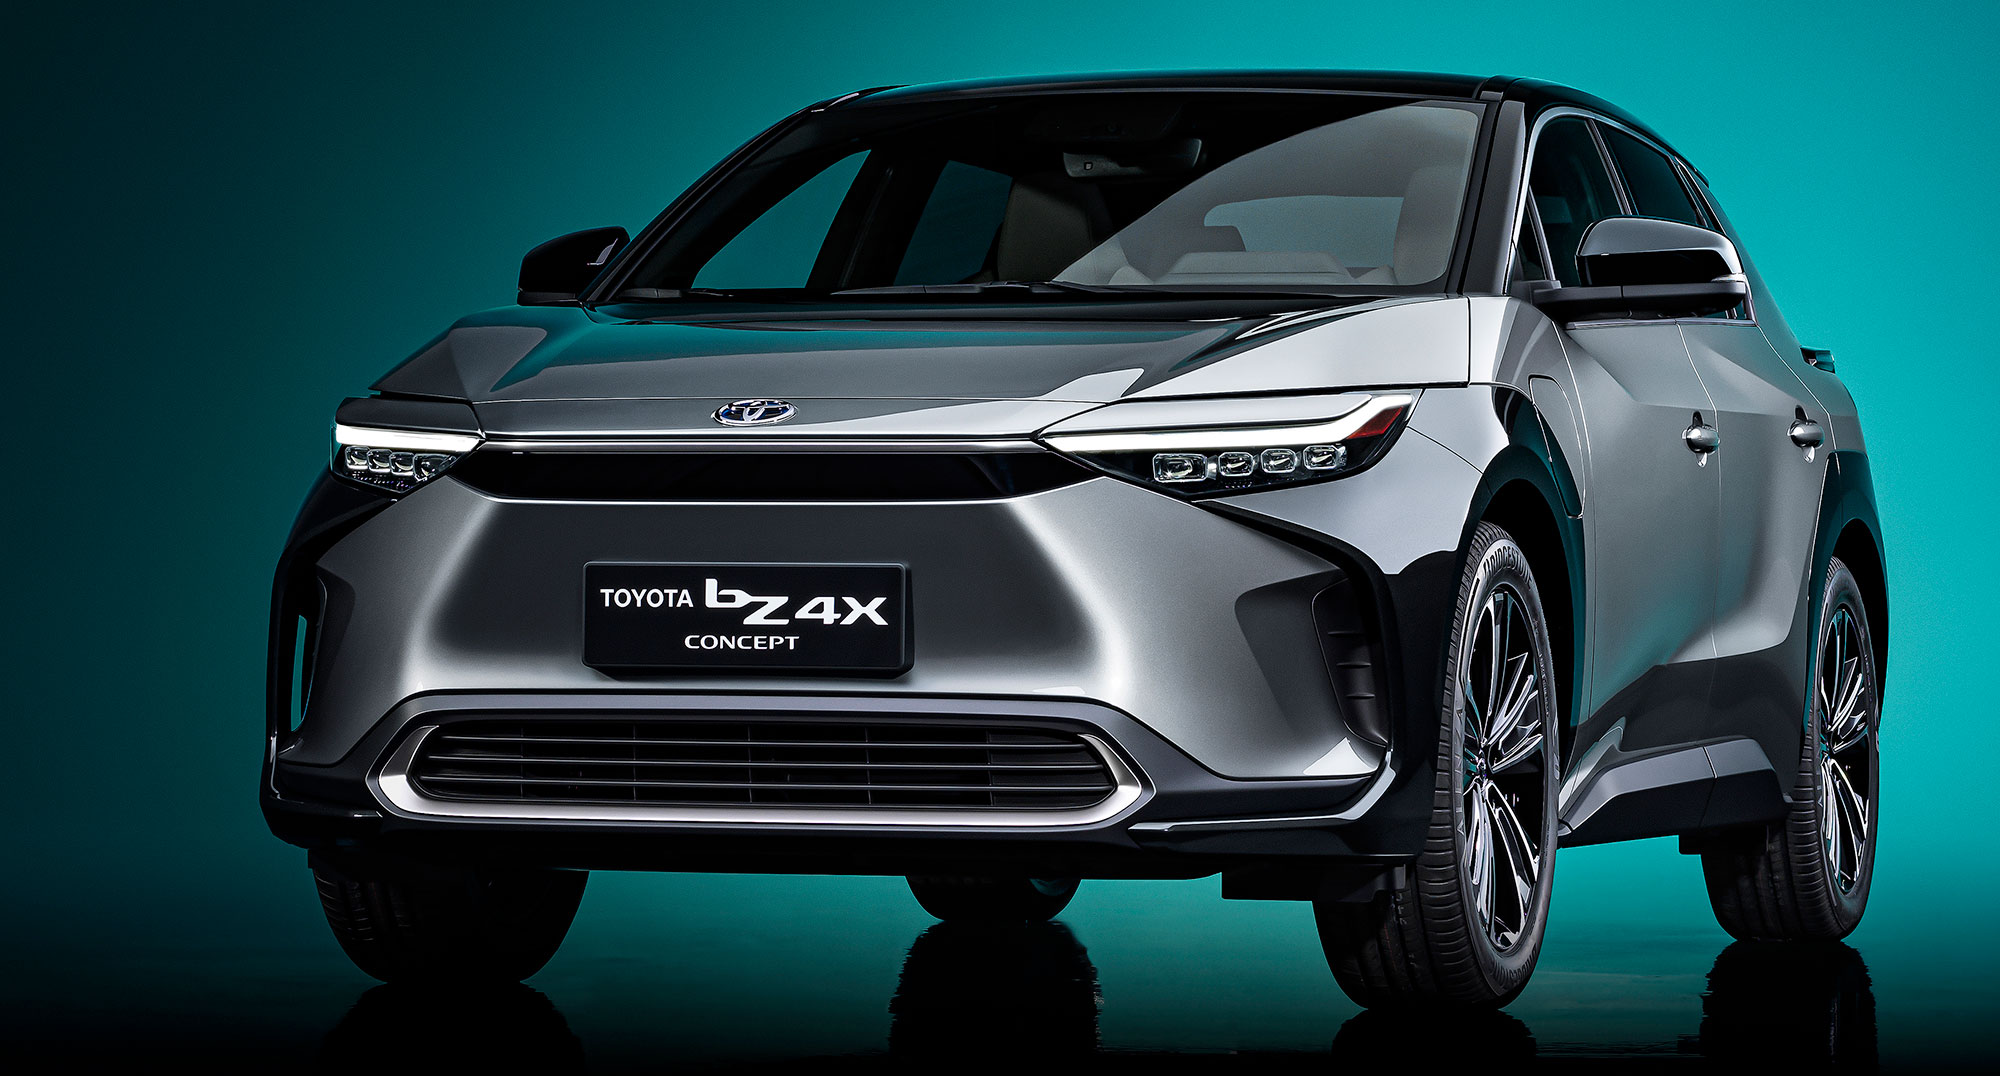 Toyota springer på elbølgen med SUV | FDM